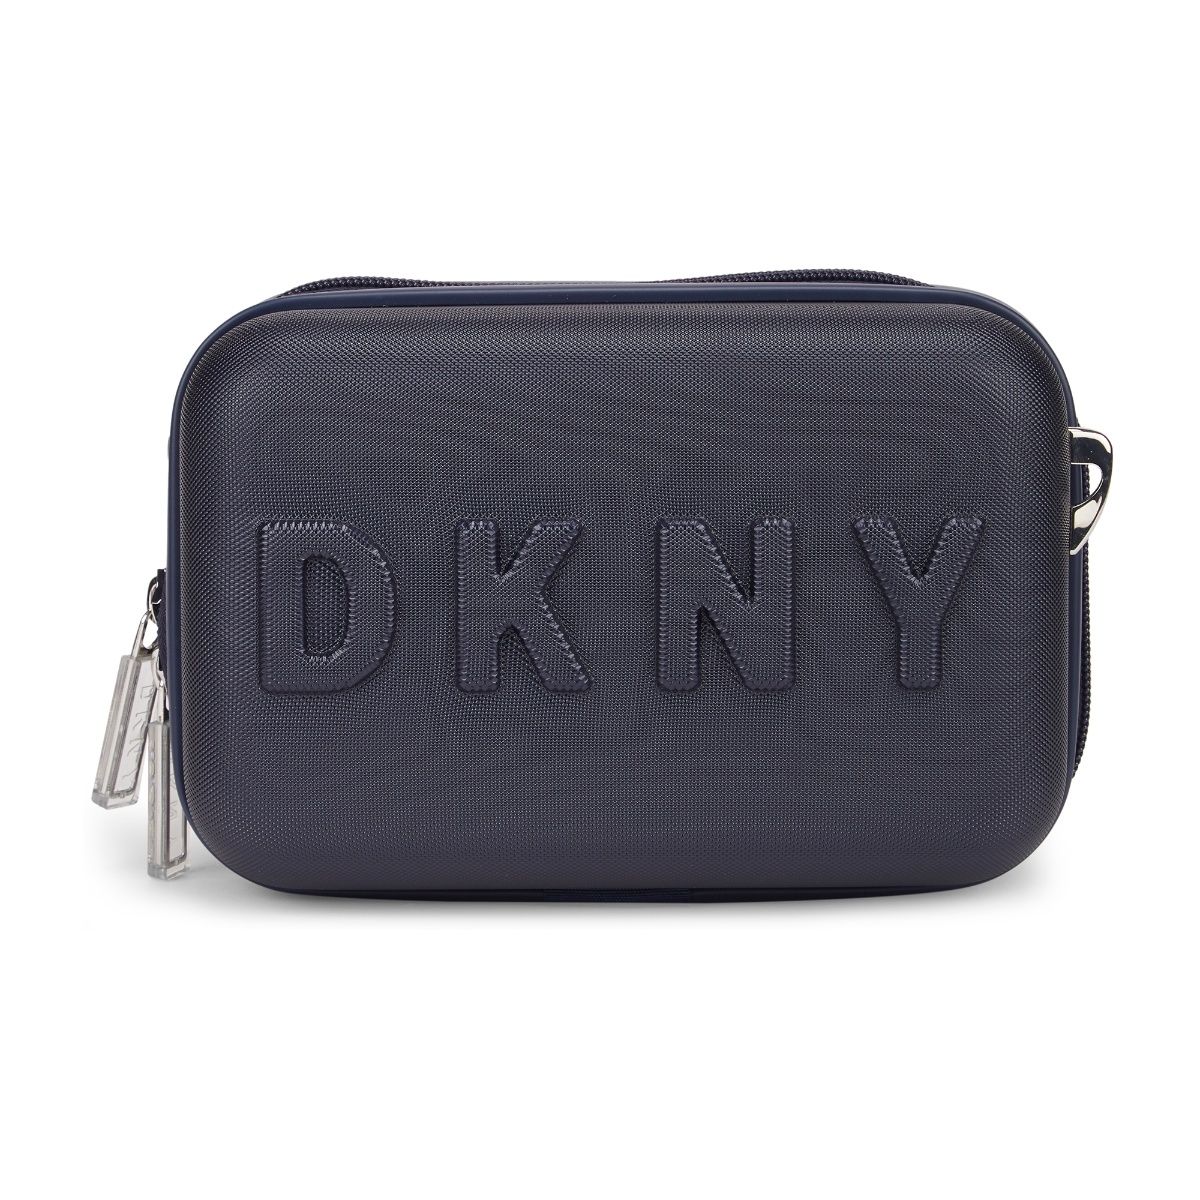 Dkny | Bags | Dkny Blue Purse | Poshmark